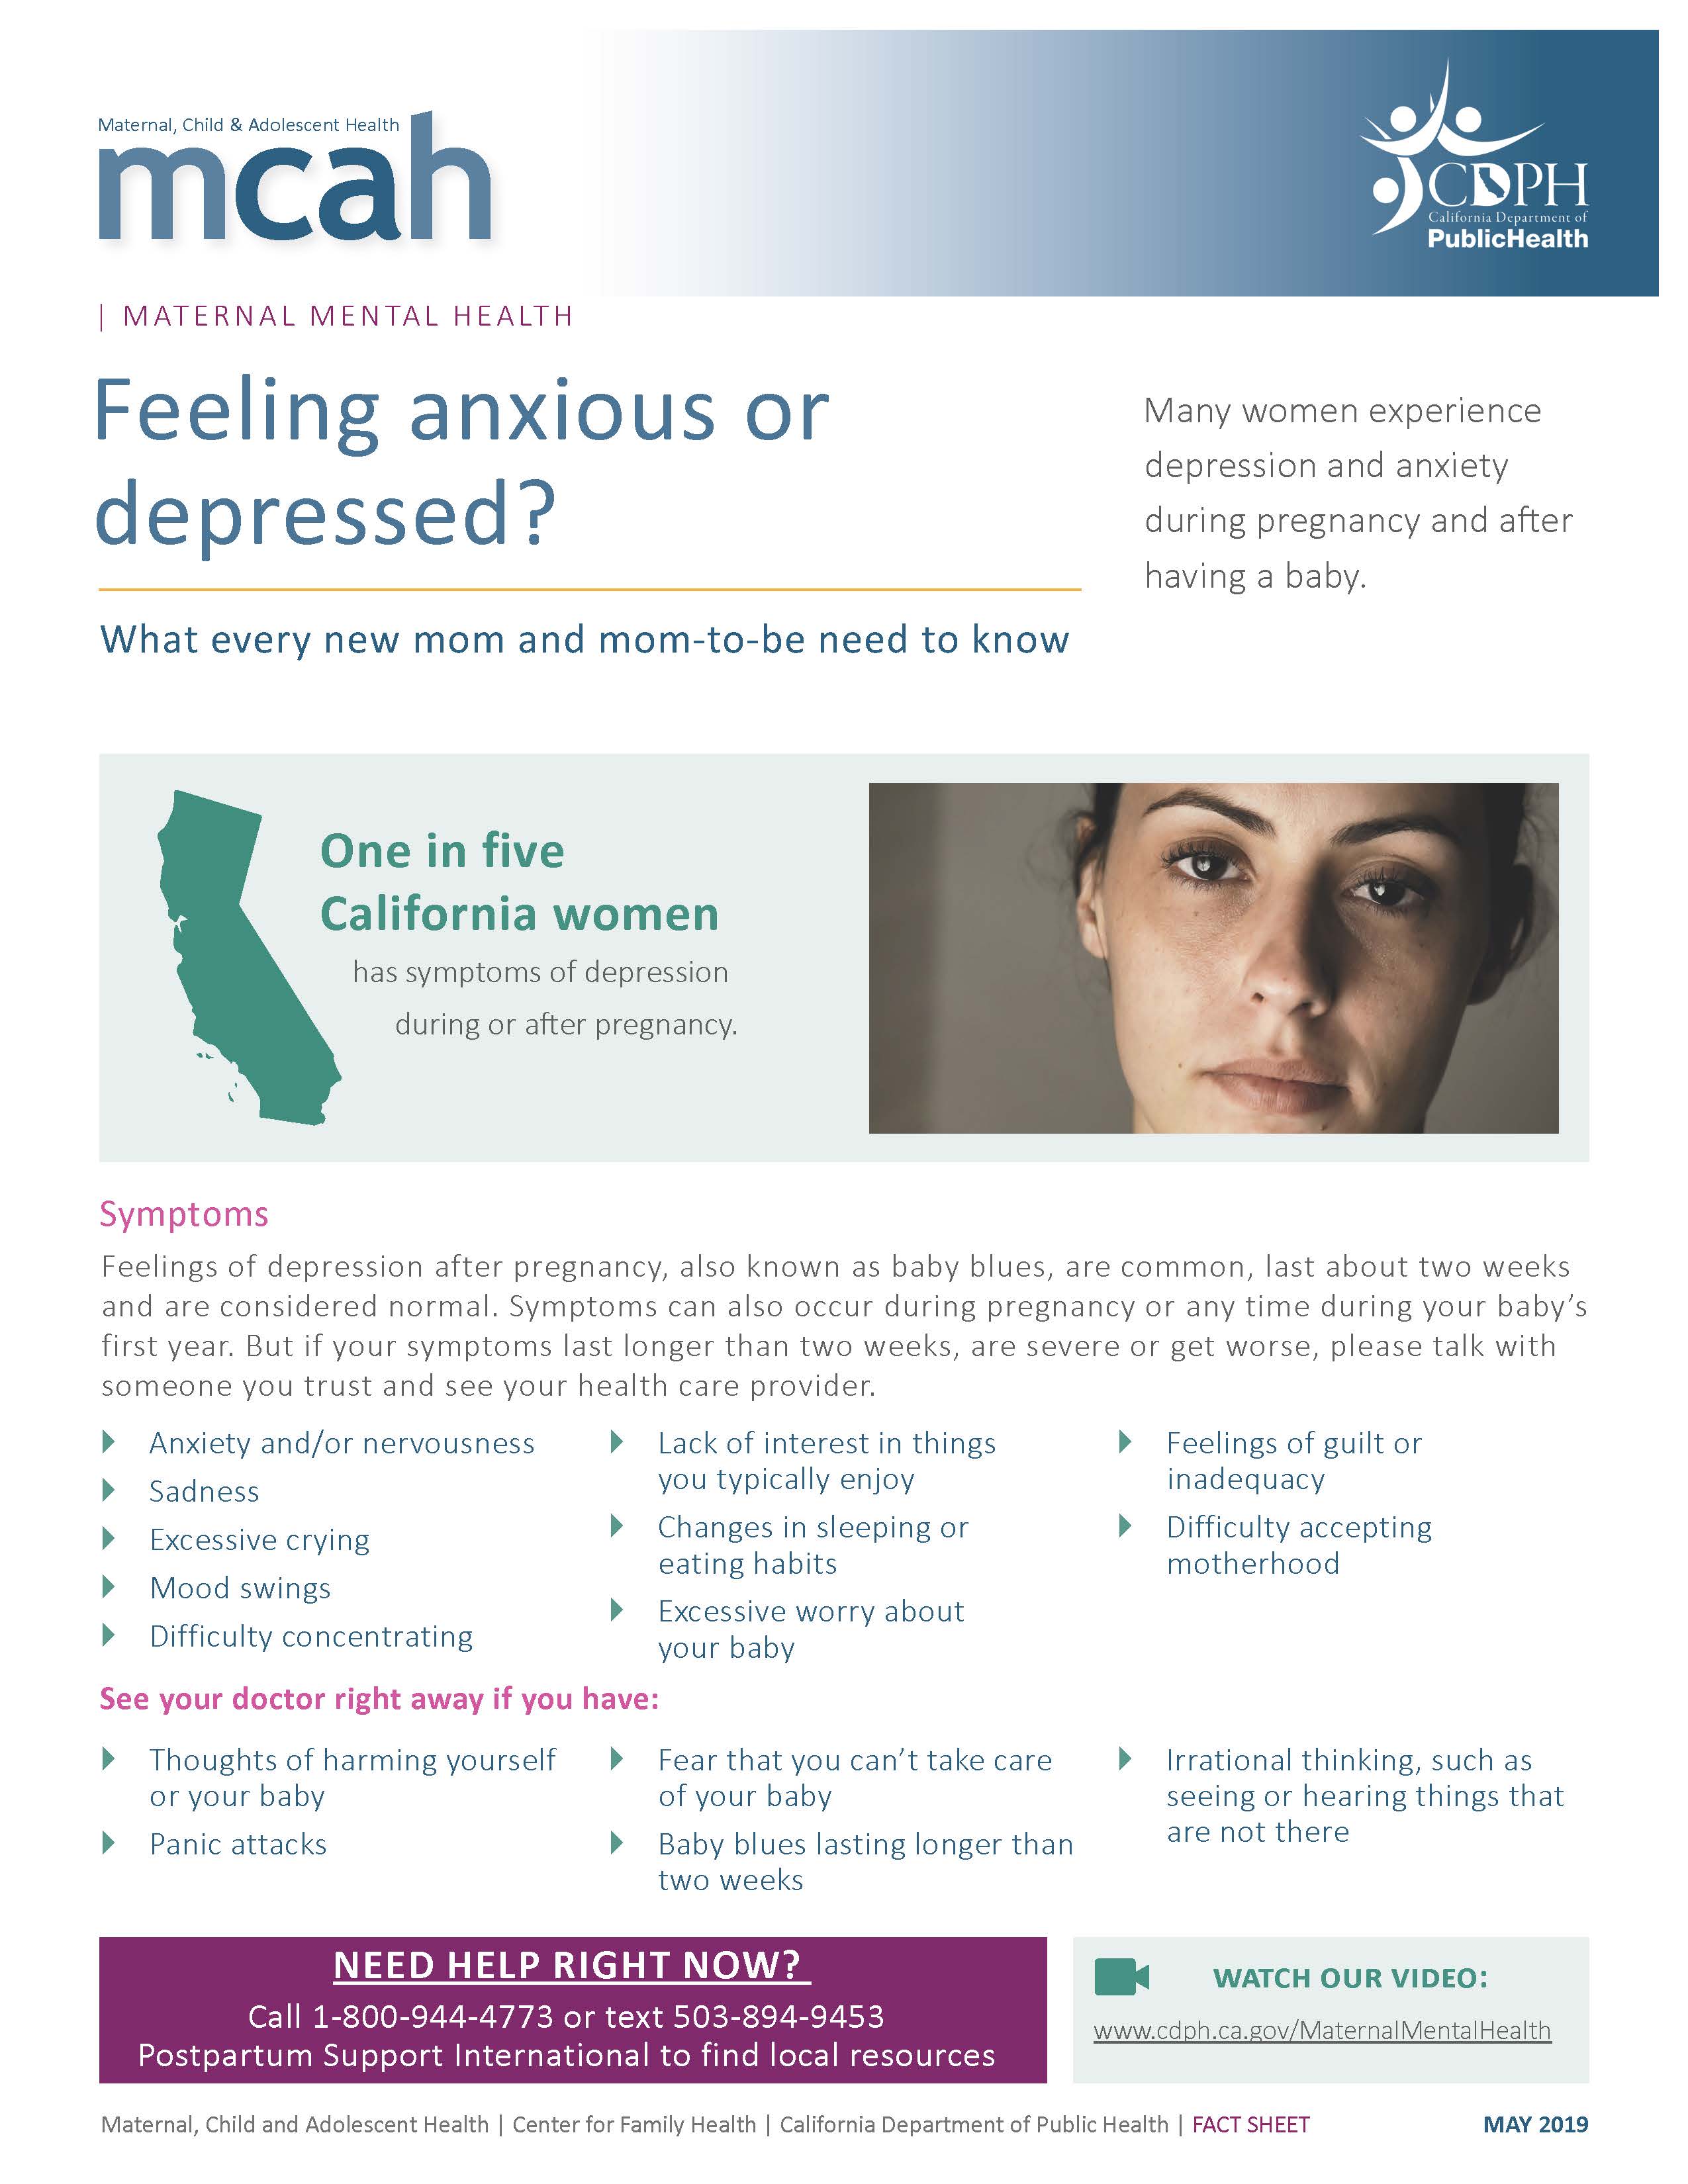 Preview of Maternal Mental Health Fact Sheet